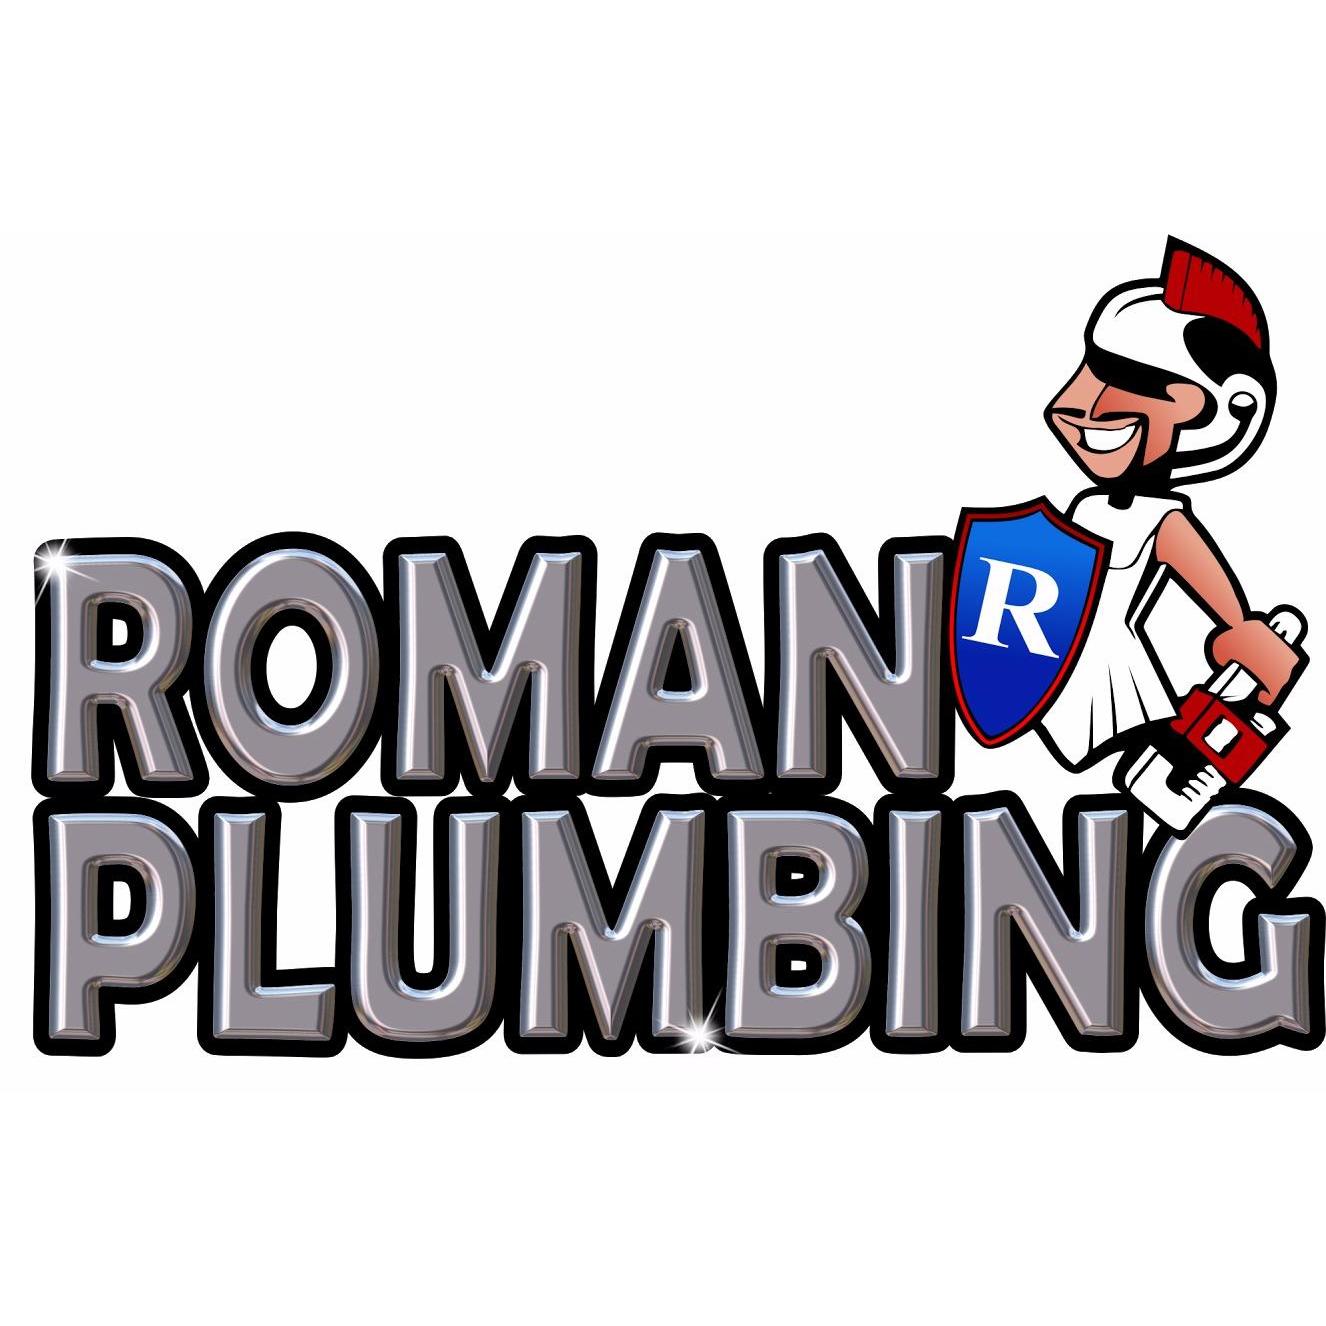 Roman Plumbing Inc. Logo